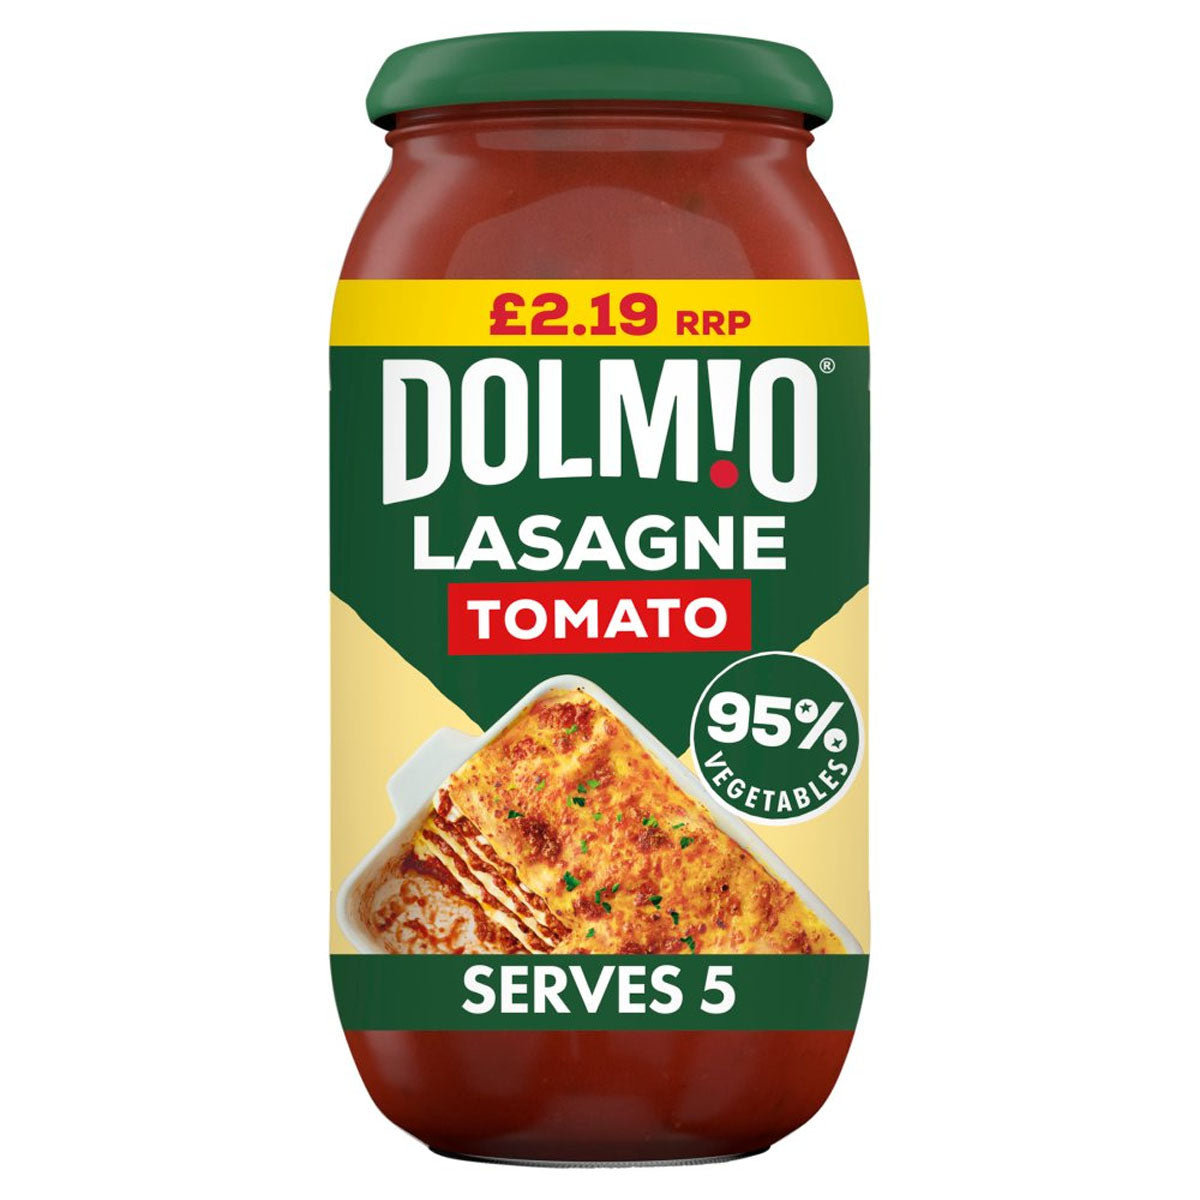 A jar of Dolmio - Lasagne Red Tomato Sauce - 500g serves 5.